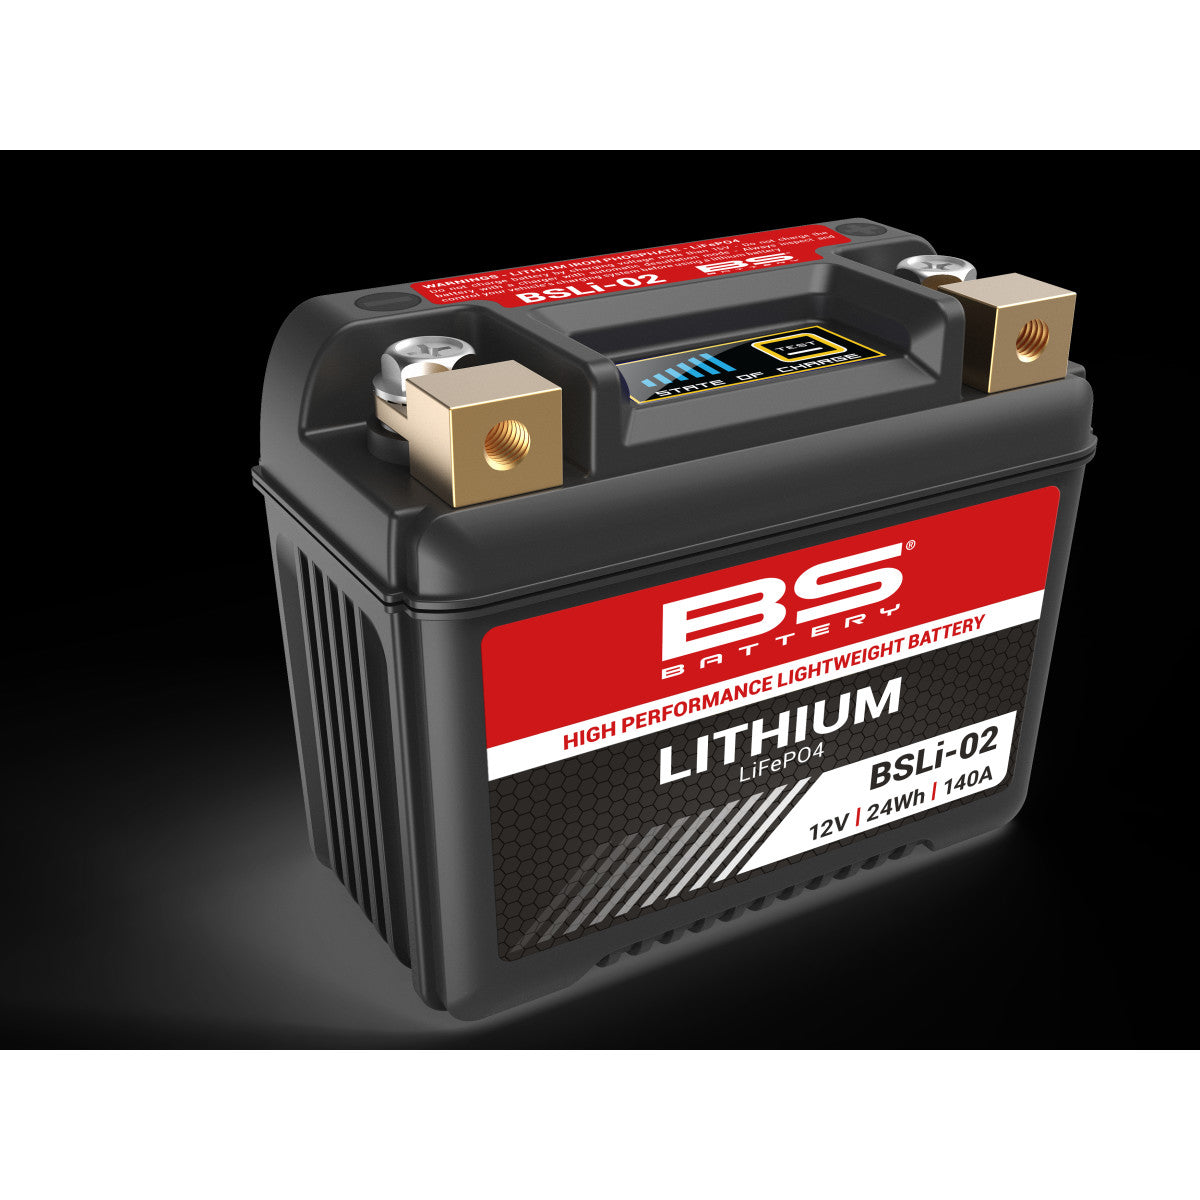 Lithium Lifepo4 Batteries